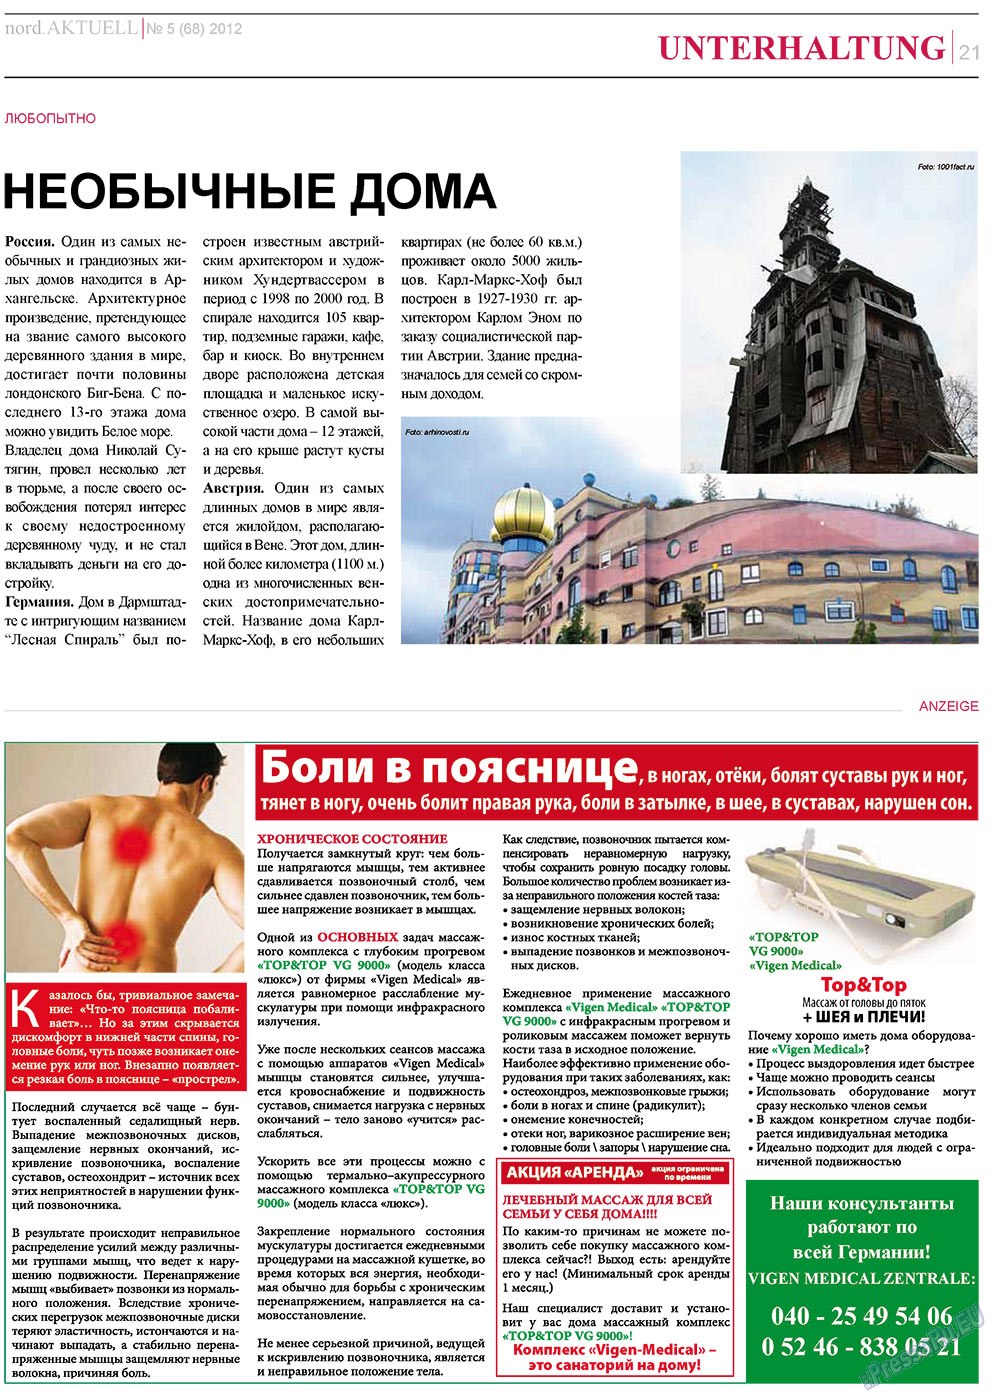 nord.Aktuell, газета. 2012 №5 стр.21